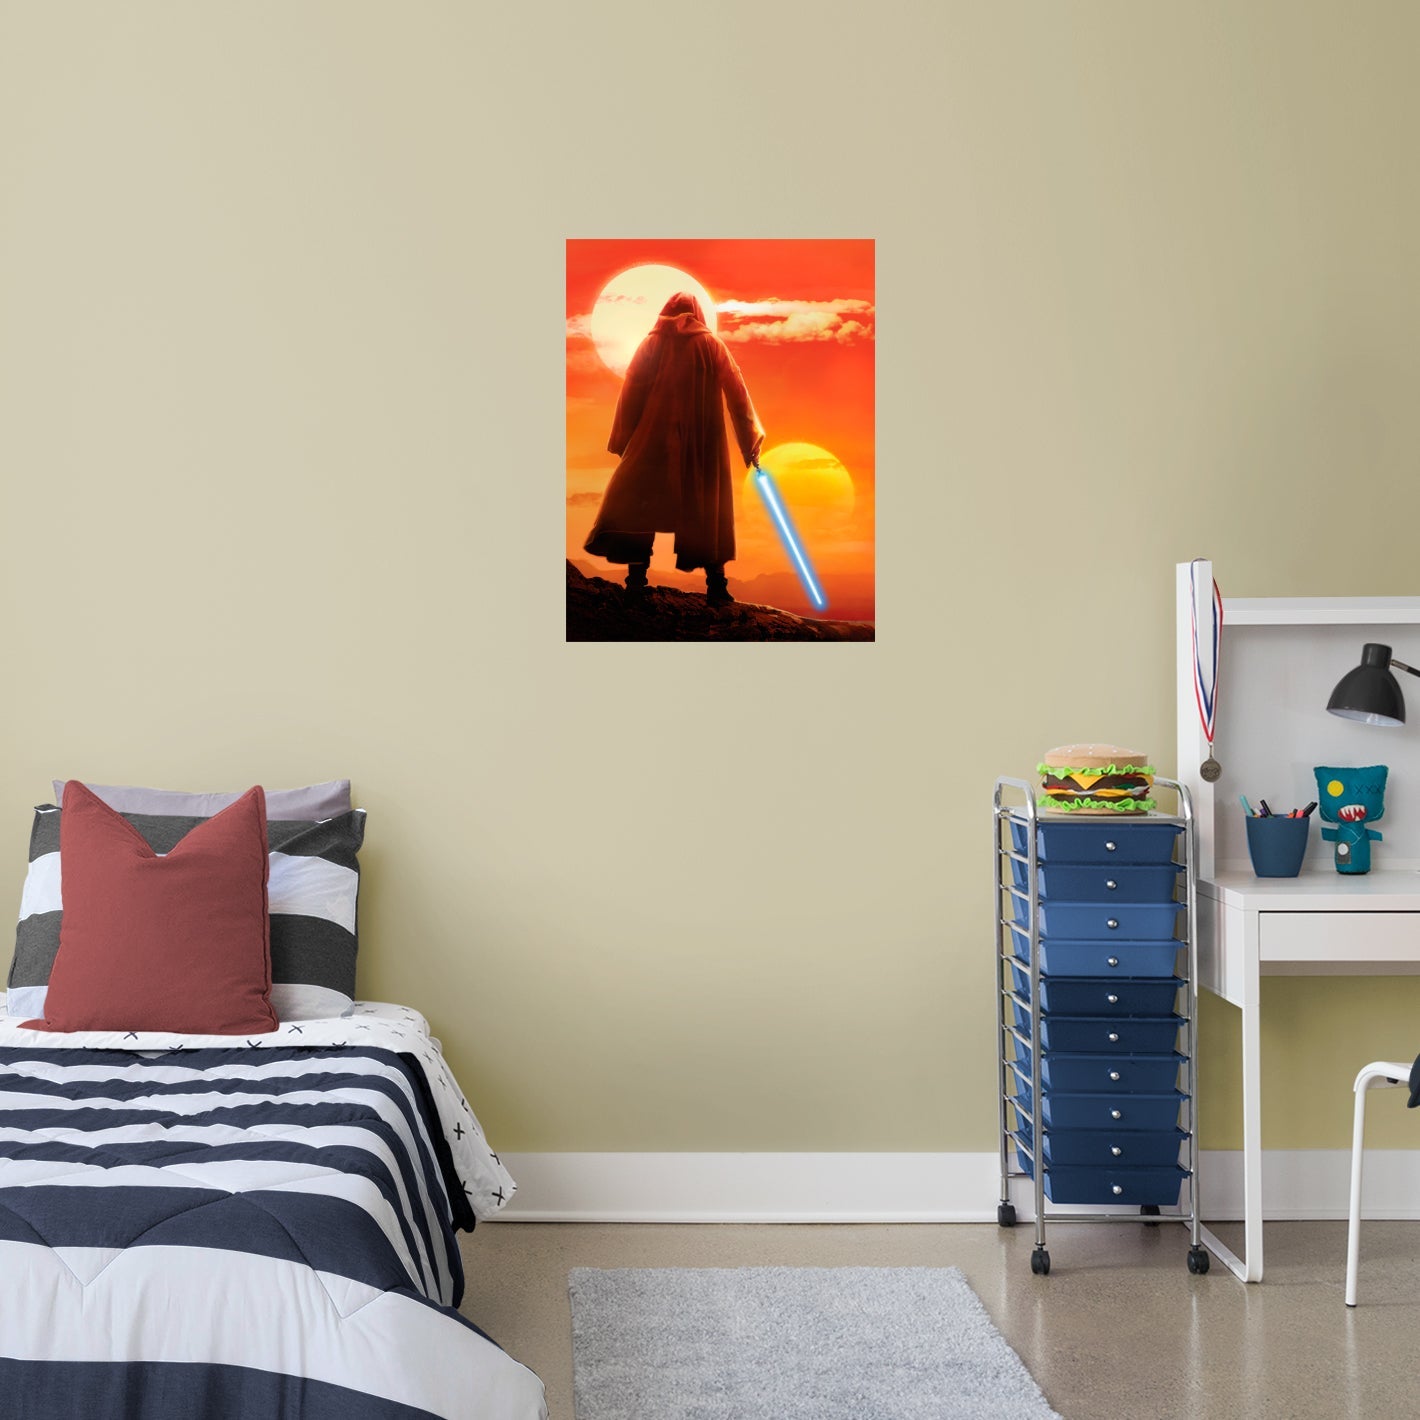 Obi-Wan Kenobi: Obi-Wan Tatooine Sunset Poster - Officially Licensed Star Wars Removable Adhesive Decal